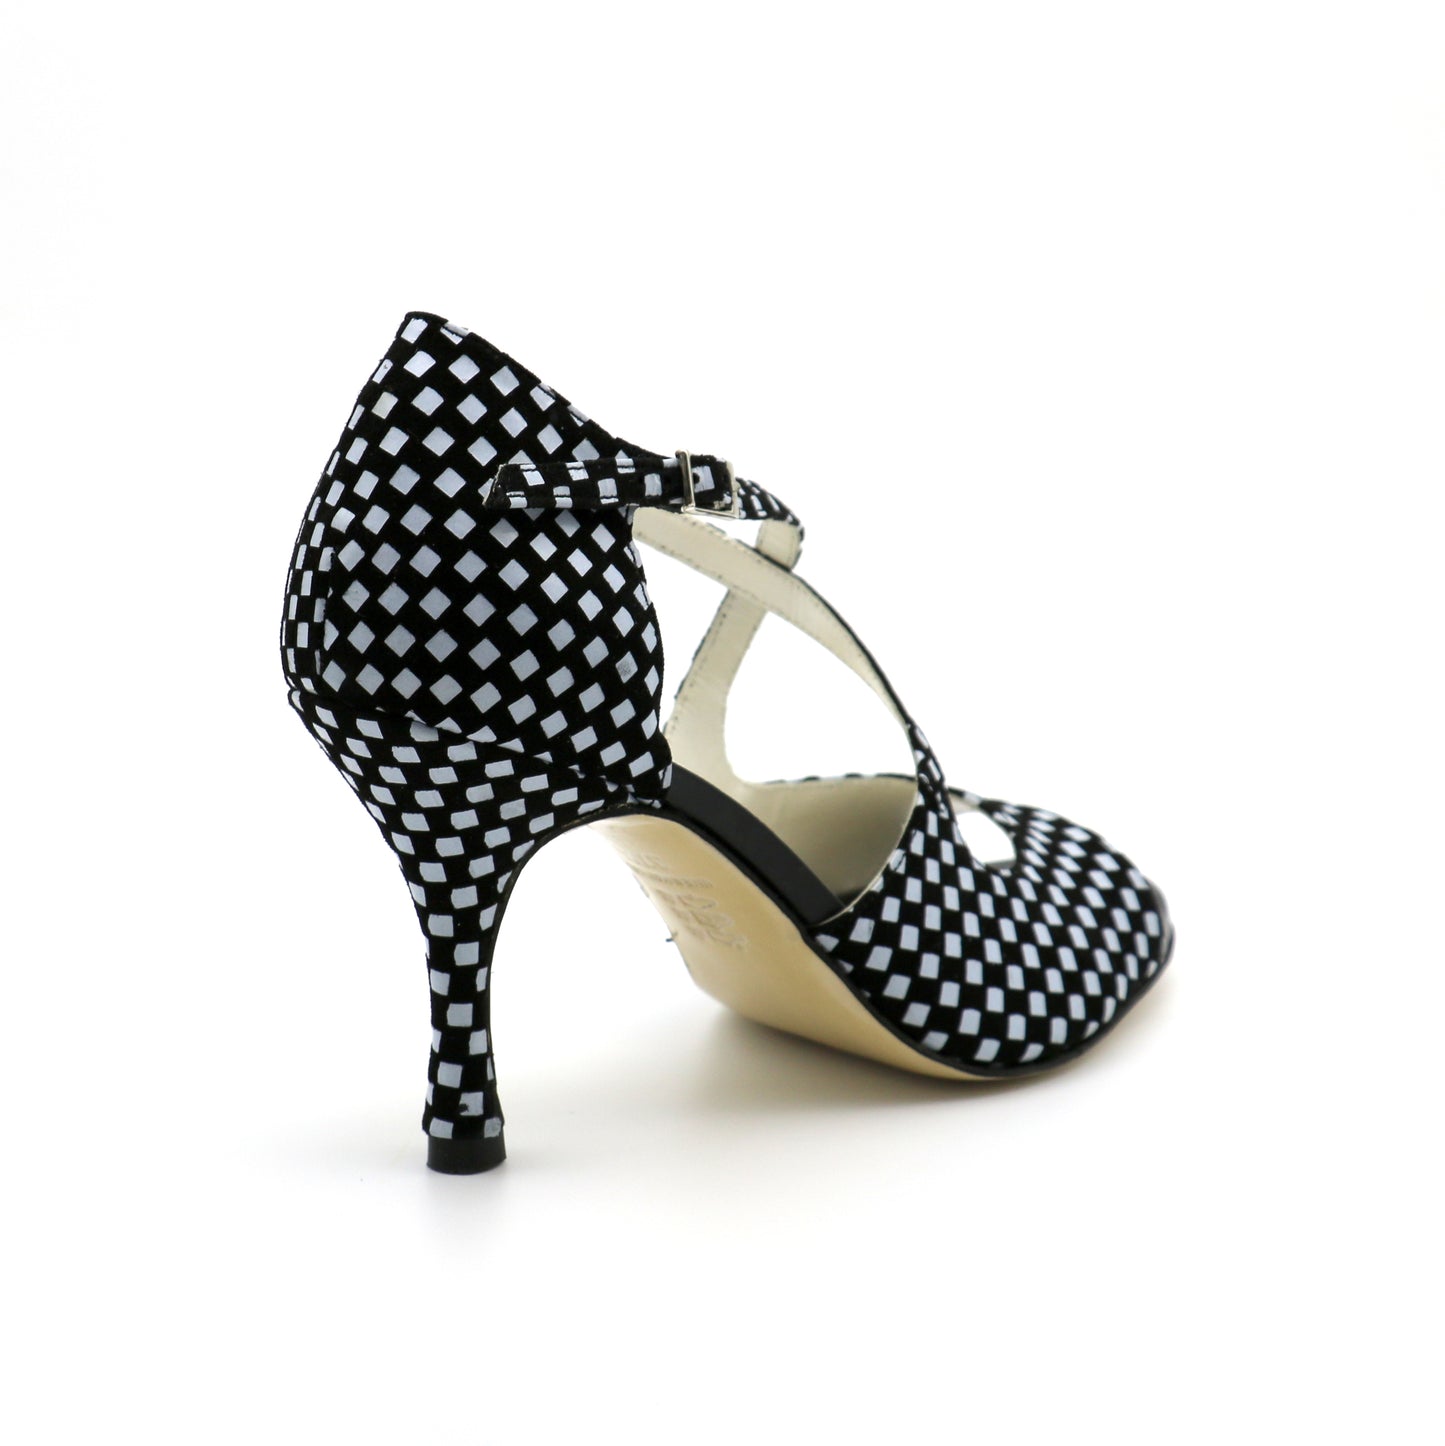 Black & White crossed heels 8cm covered B&W